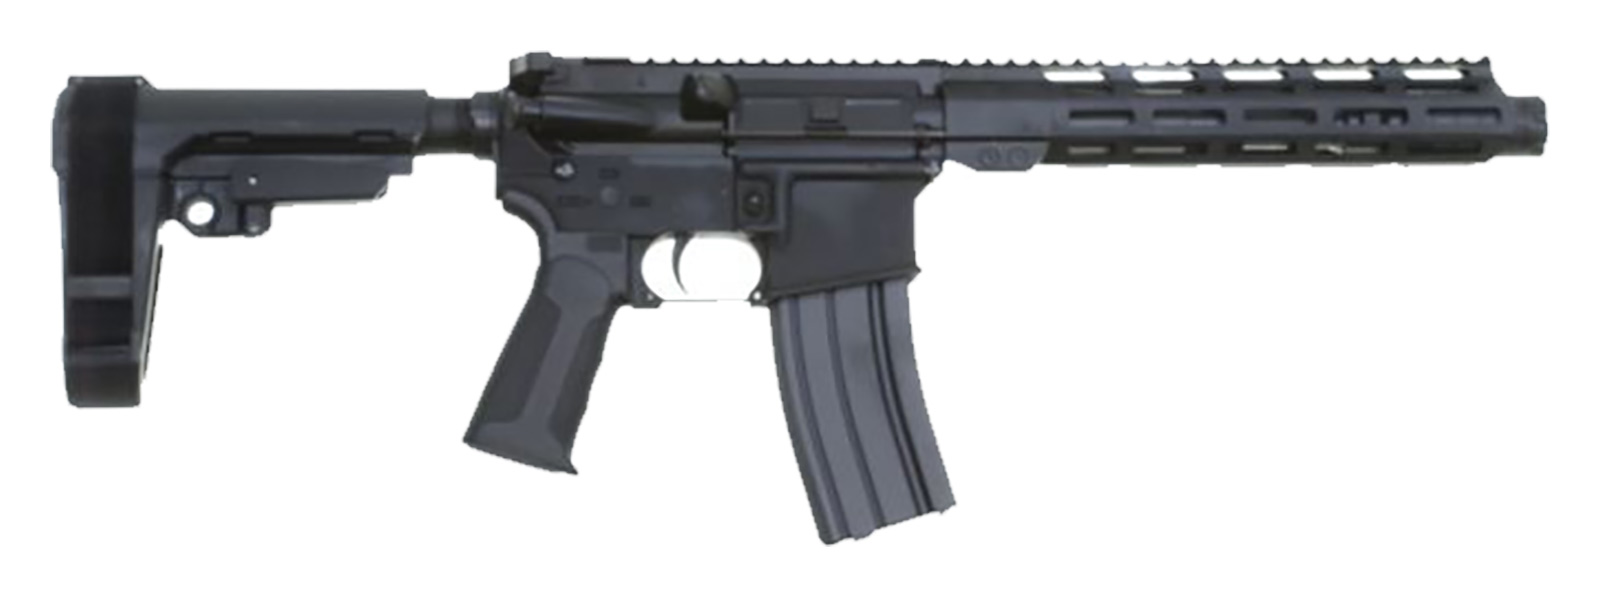 cbc-ps2-forged-aluminum-ar-pistol-black-300-aac-7-5-barrel-10-m-lok-rail-linear-compensator